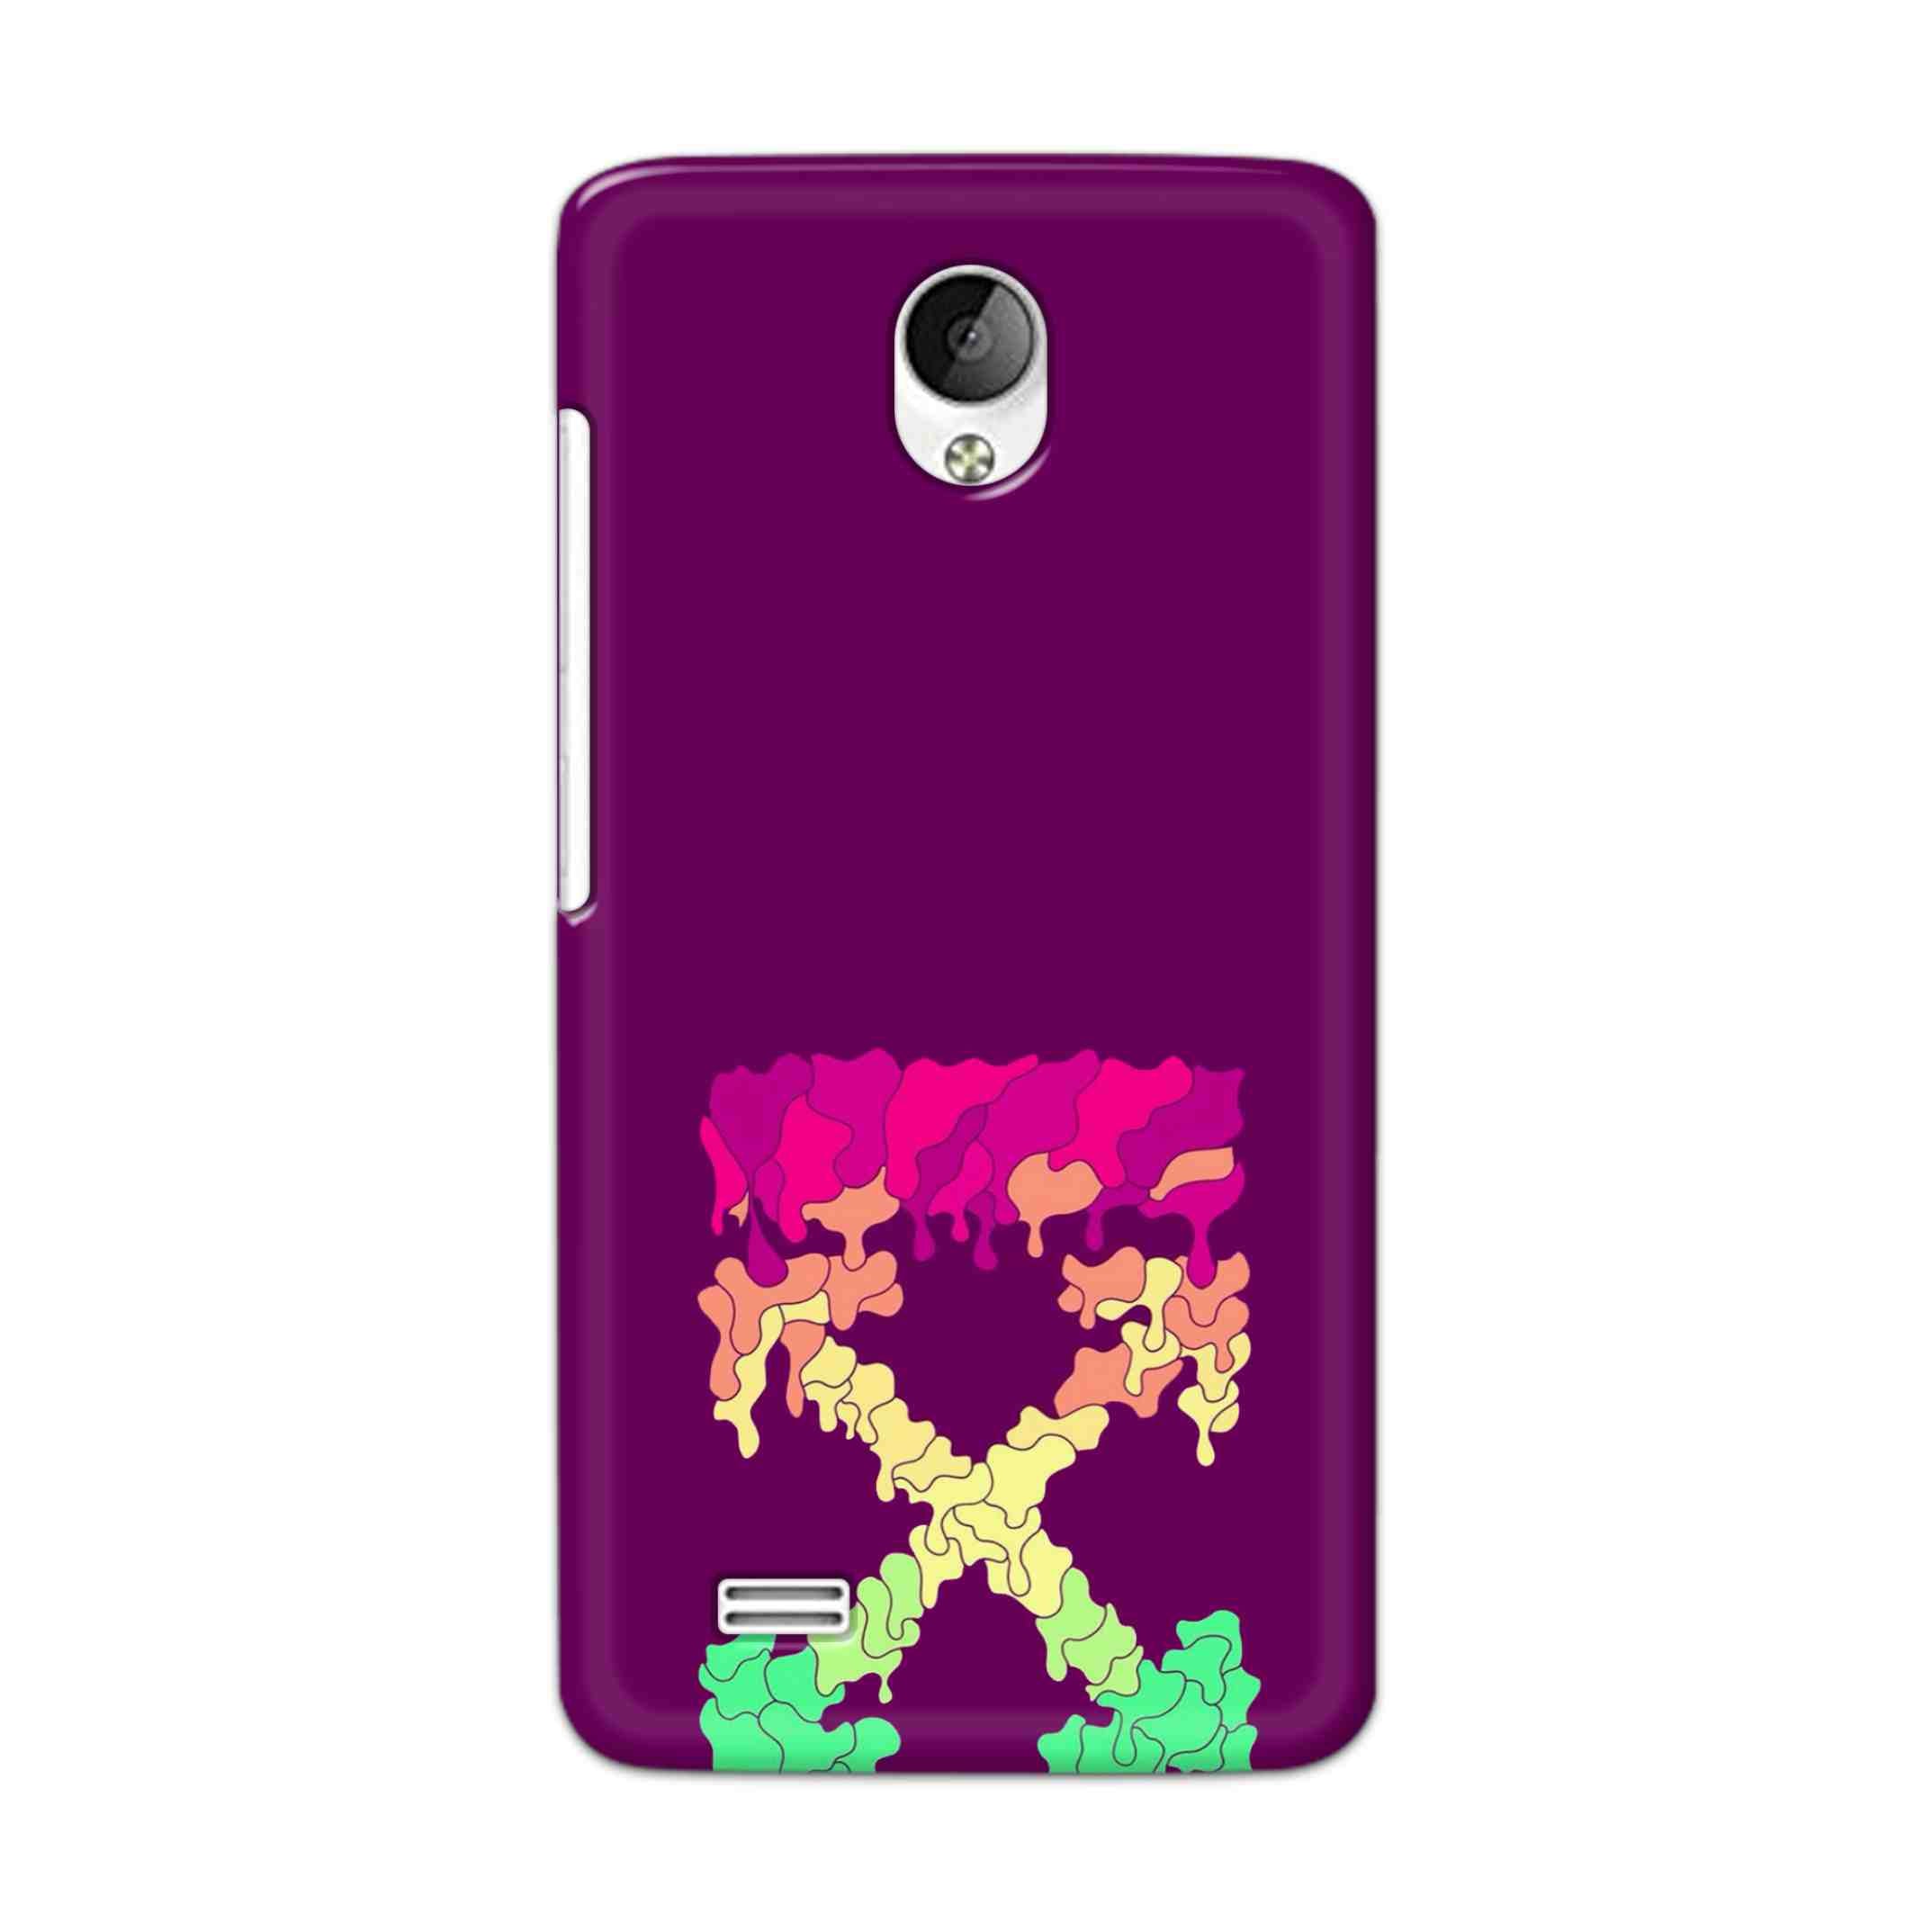 Buy X.O Hard Back Mobile Phone Case Cover For Vivo Y21 / Vivo Y21L Online